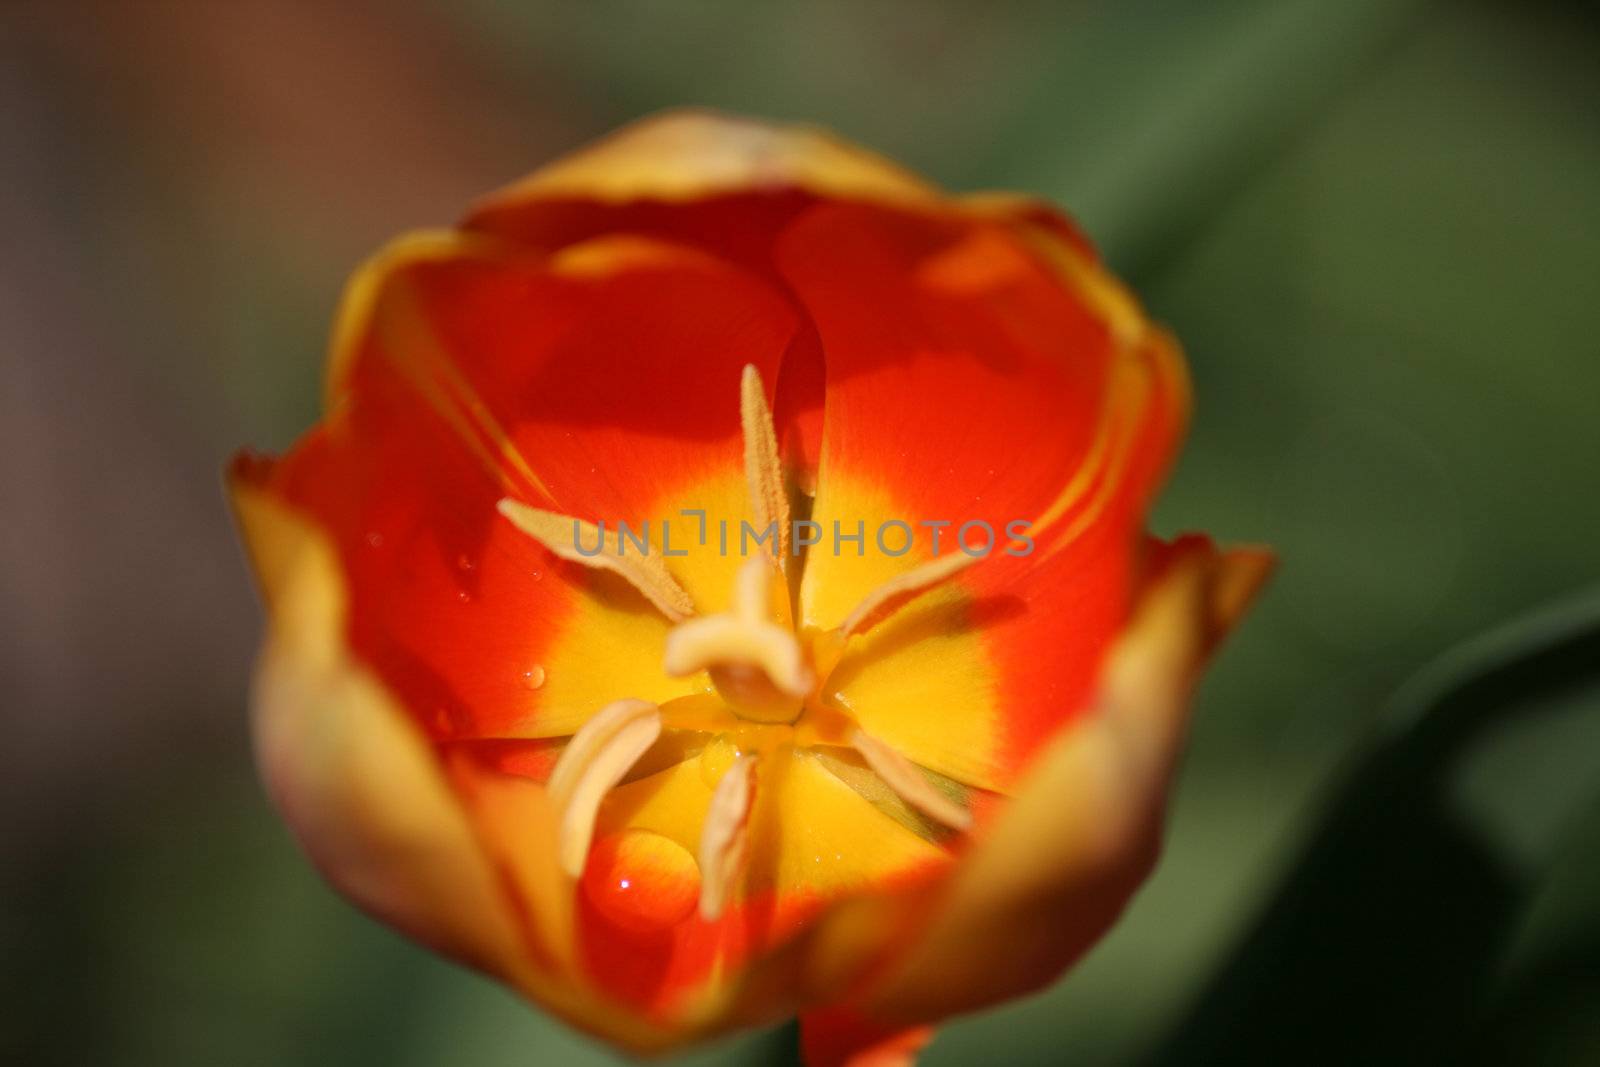 beautiful tulips, beautiful flowers by jpcasais